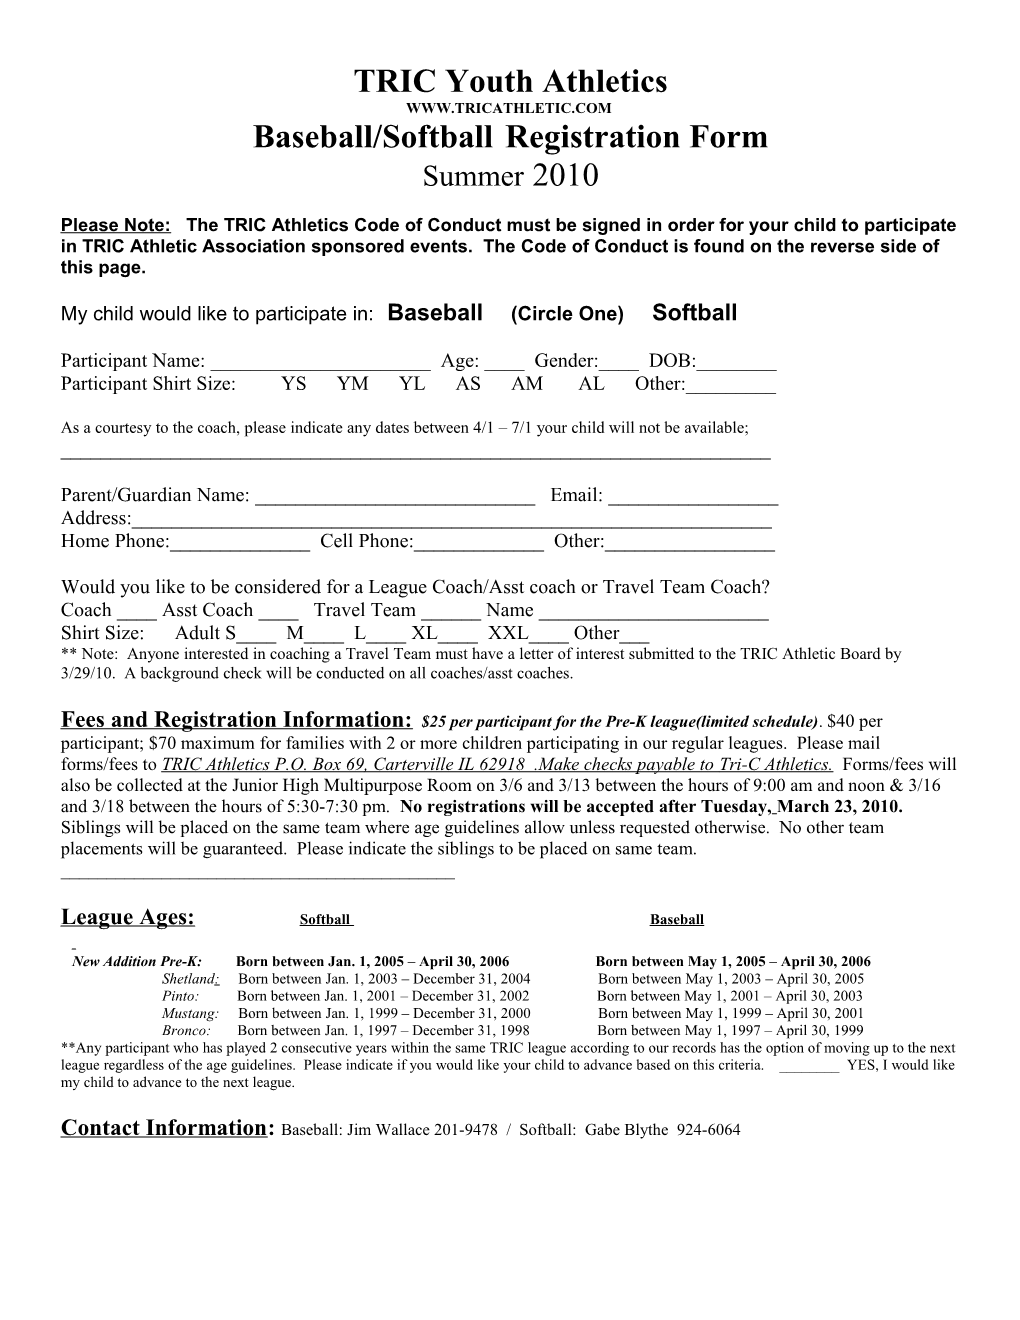 TRIC Softball Registration Form